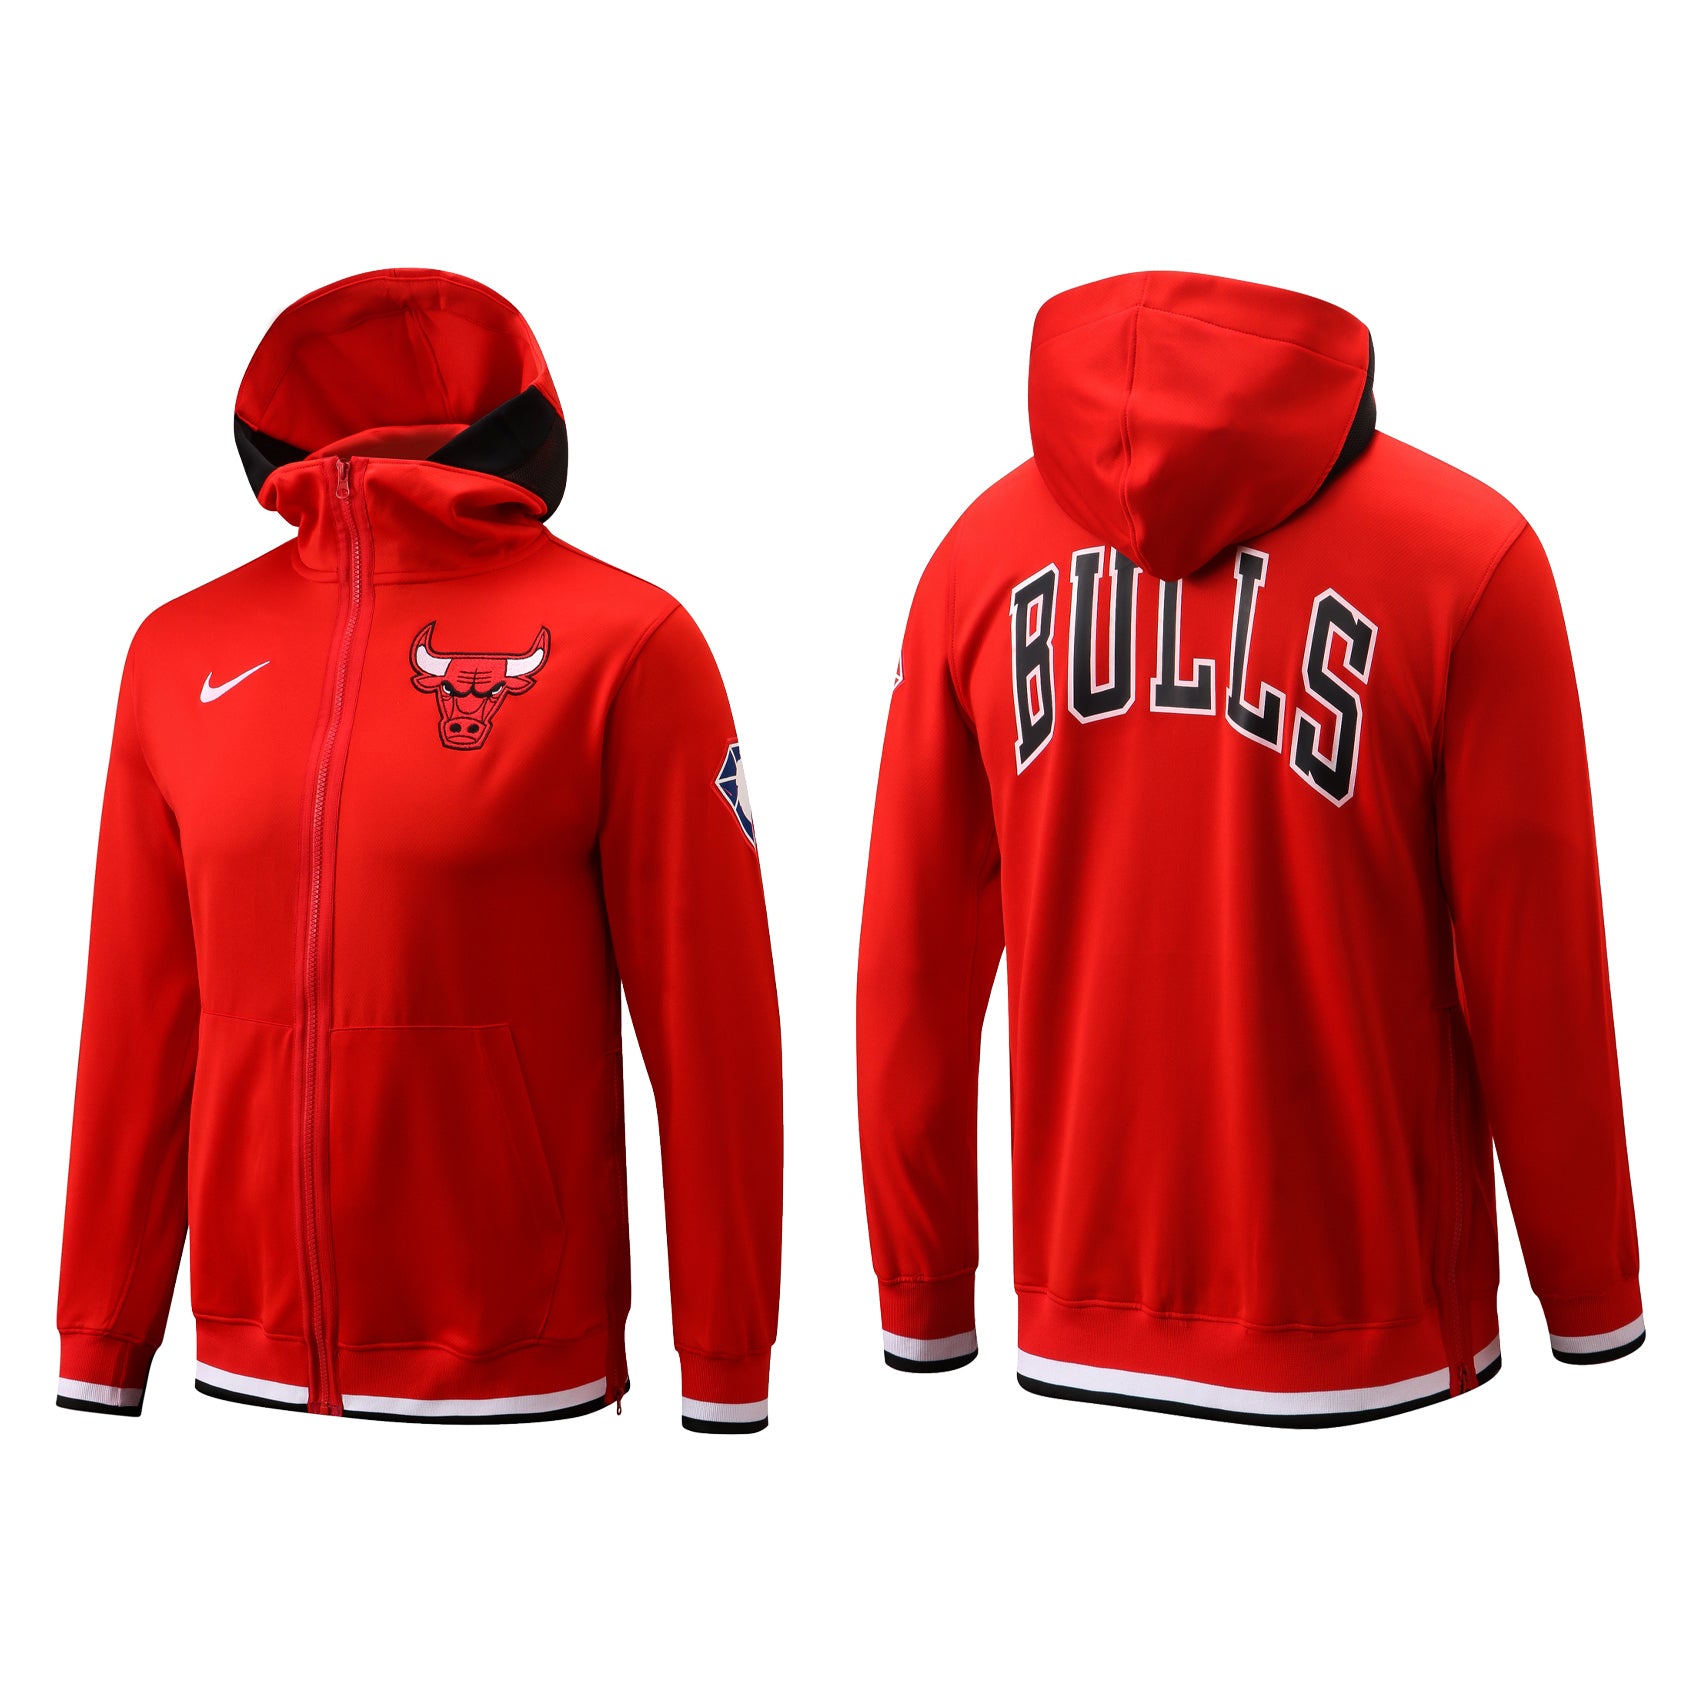 Chicago bulls red  jacket